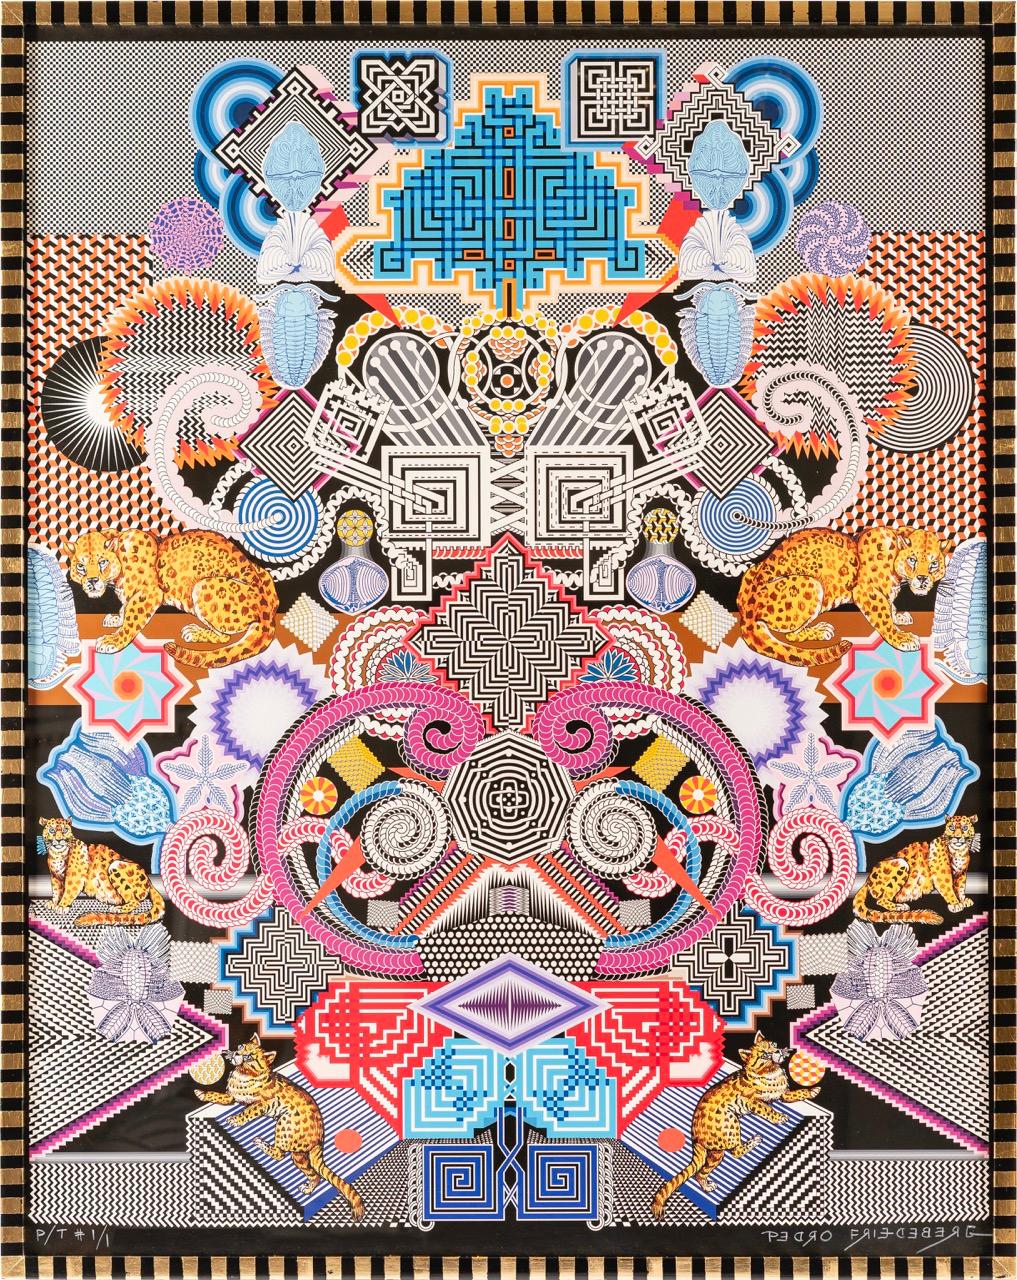 Pedro Friedeberg Figurative Print - "Tiempos fáciles" contemporary, surrealist, geometric forms, jaguars, patterns 